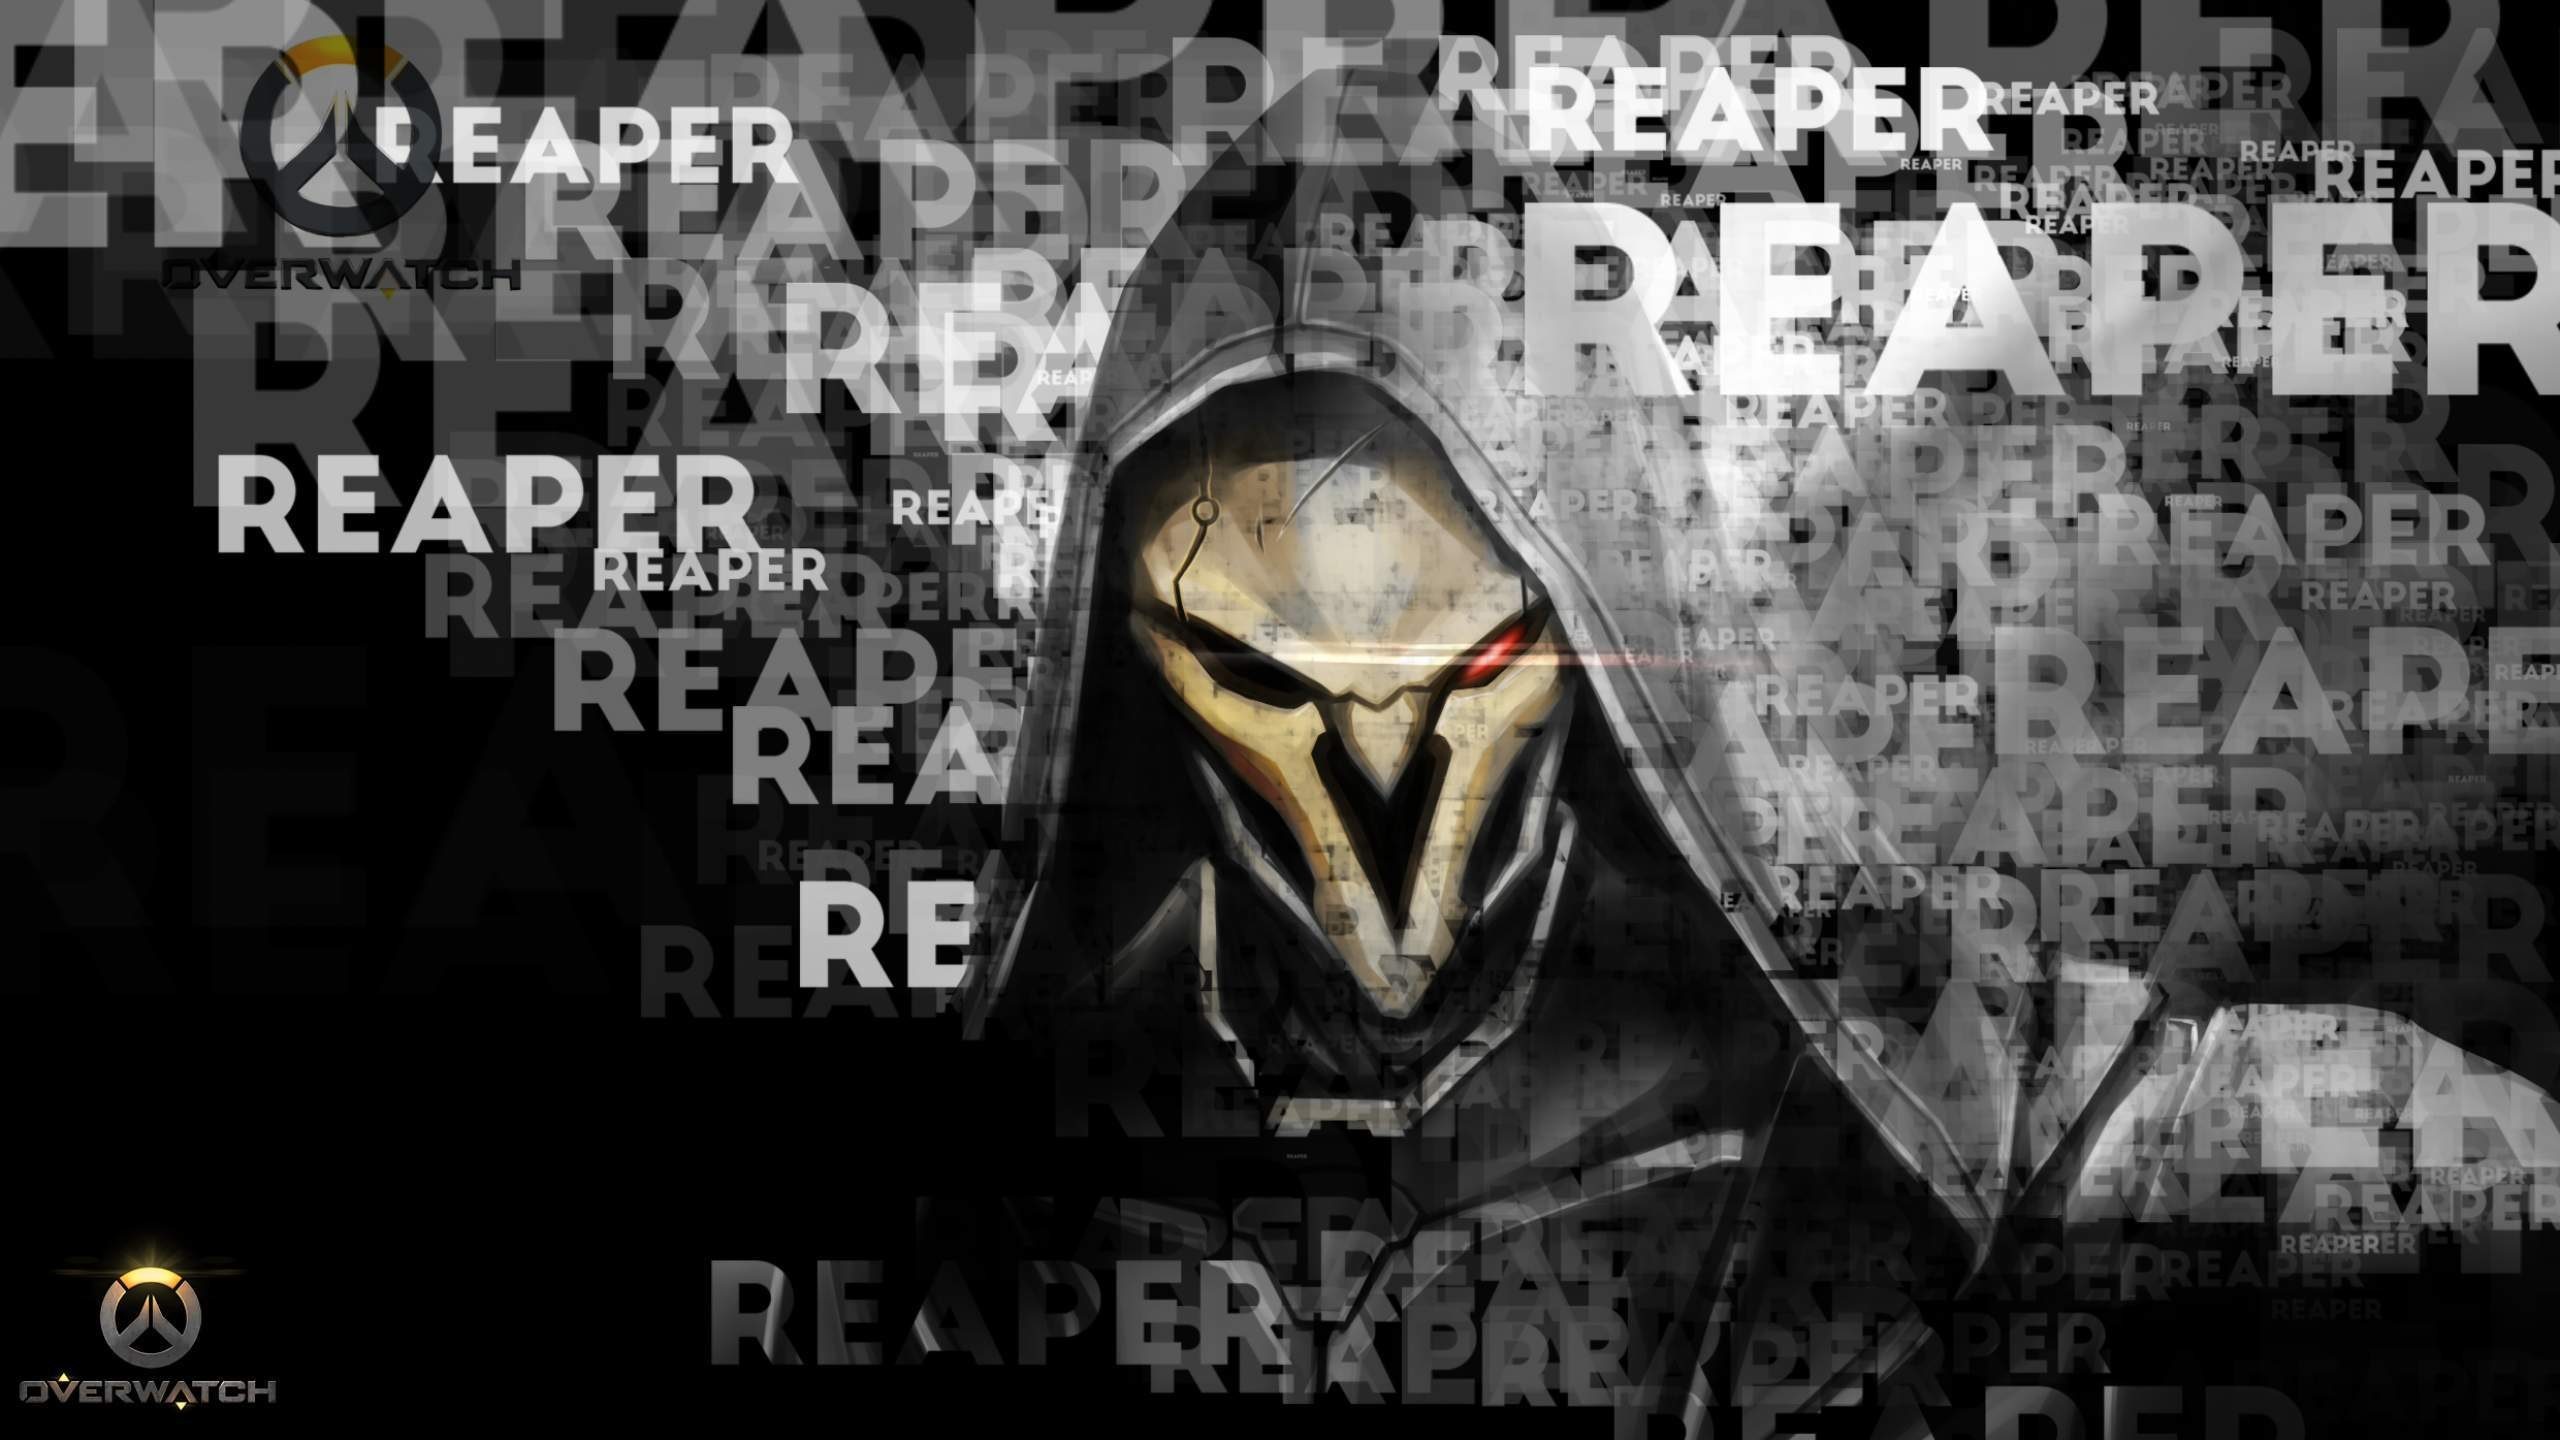 2560x1440 Related. Reaper Overwatch Wallpaper